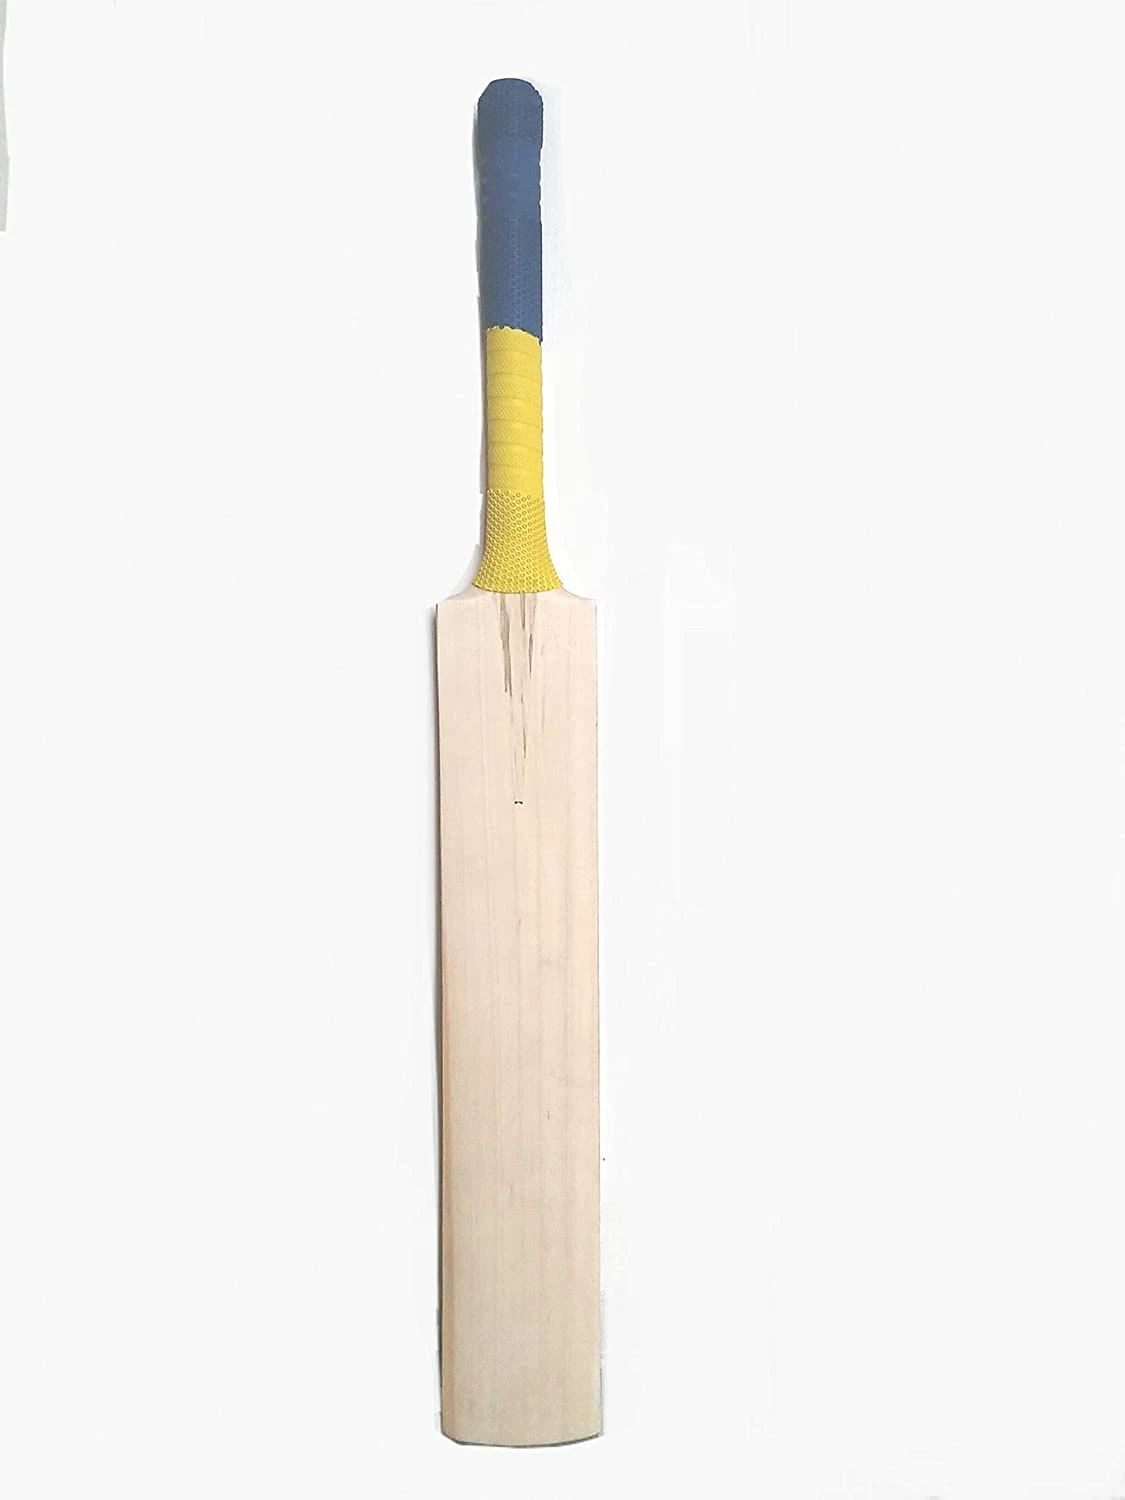 new  wooden cricket bat  outdoor sport games cricket  2020